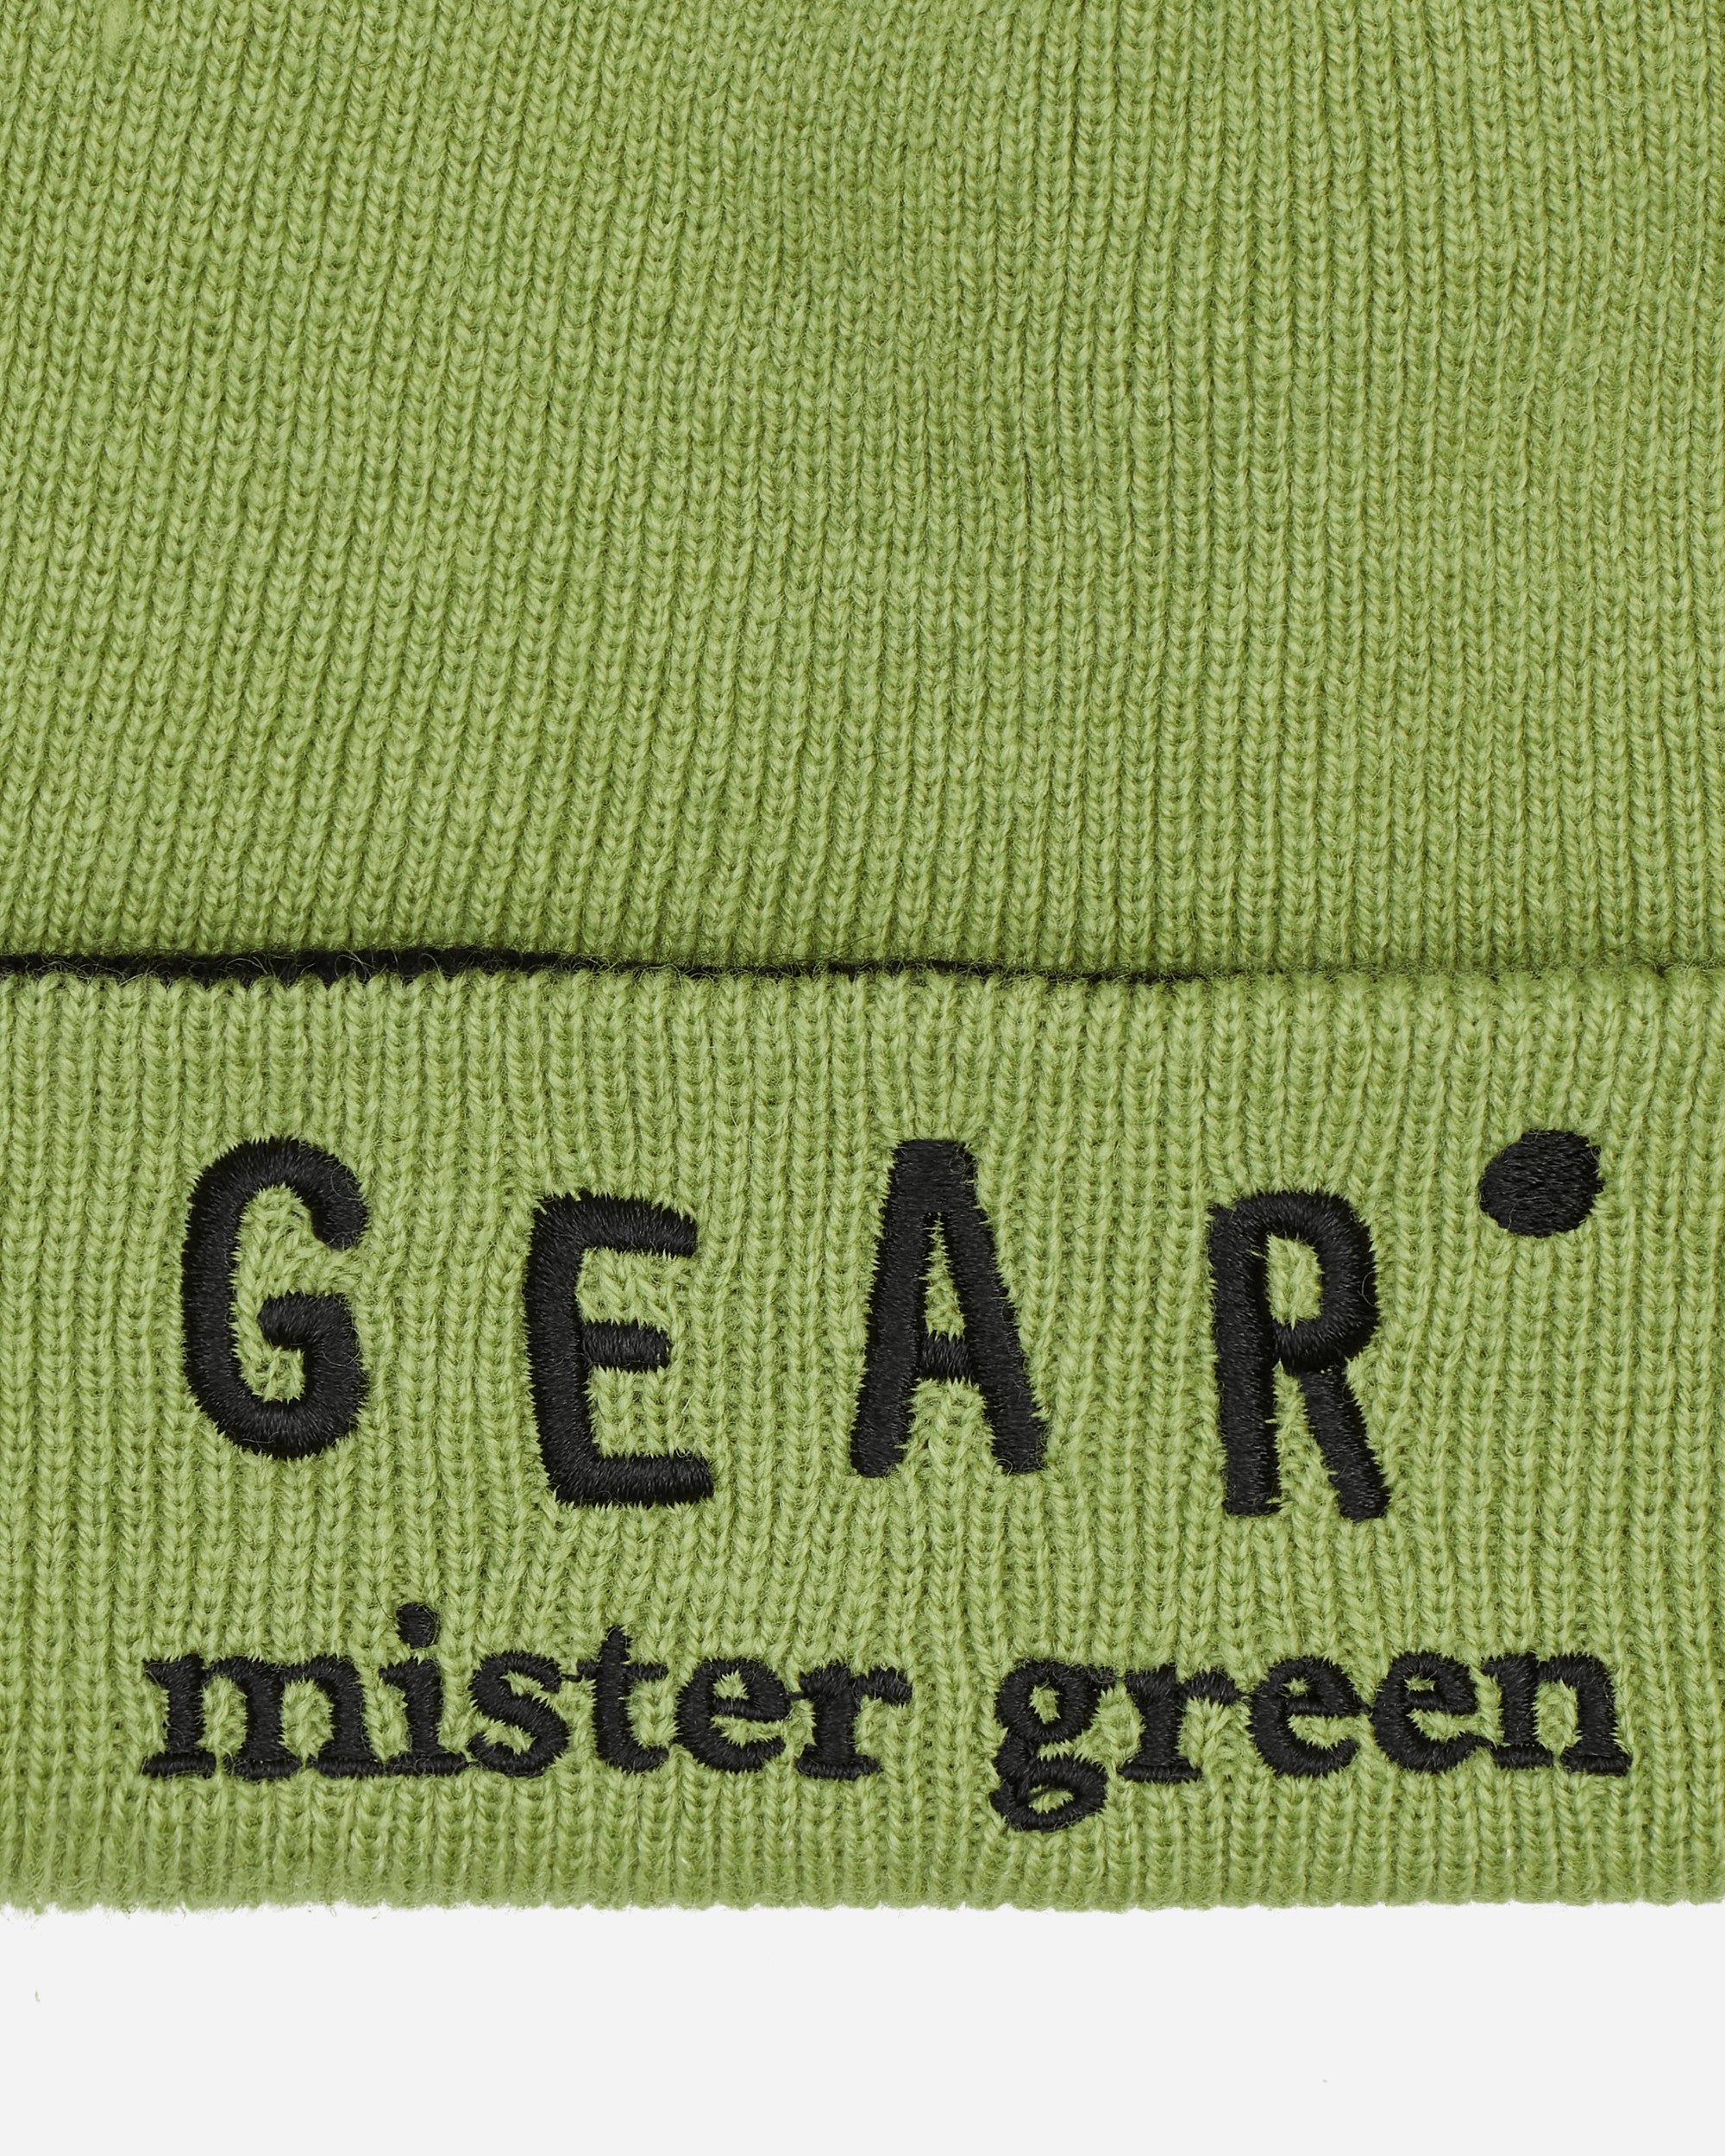 Mister Green Cashmere Gear Black/Olive Hats Beanies MGCASHMERECAP 001